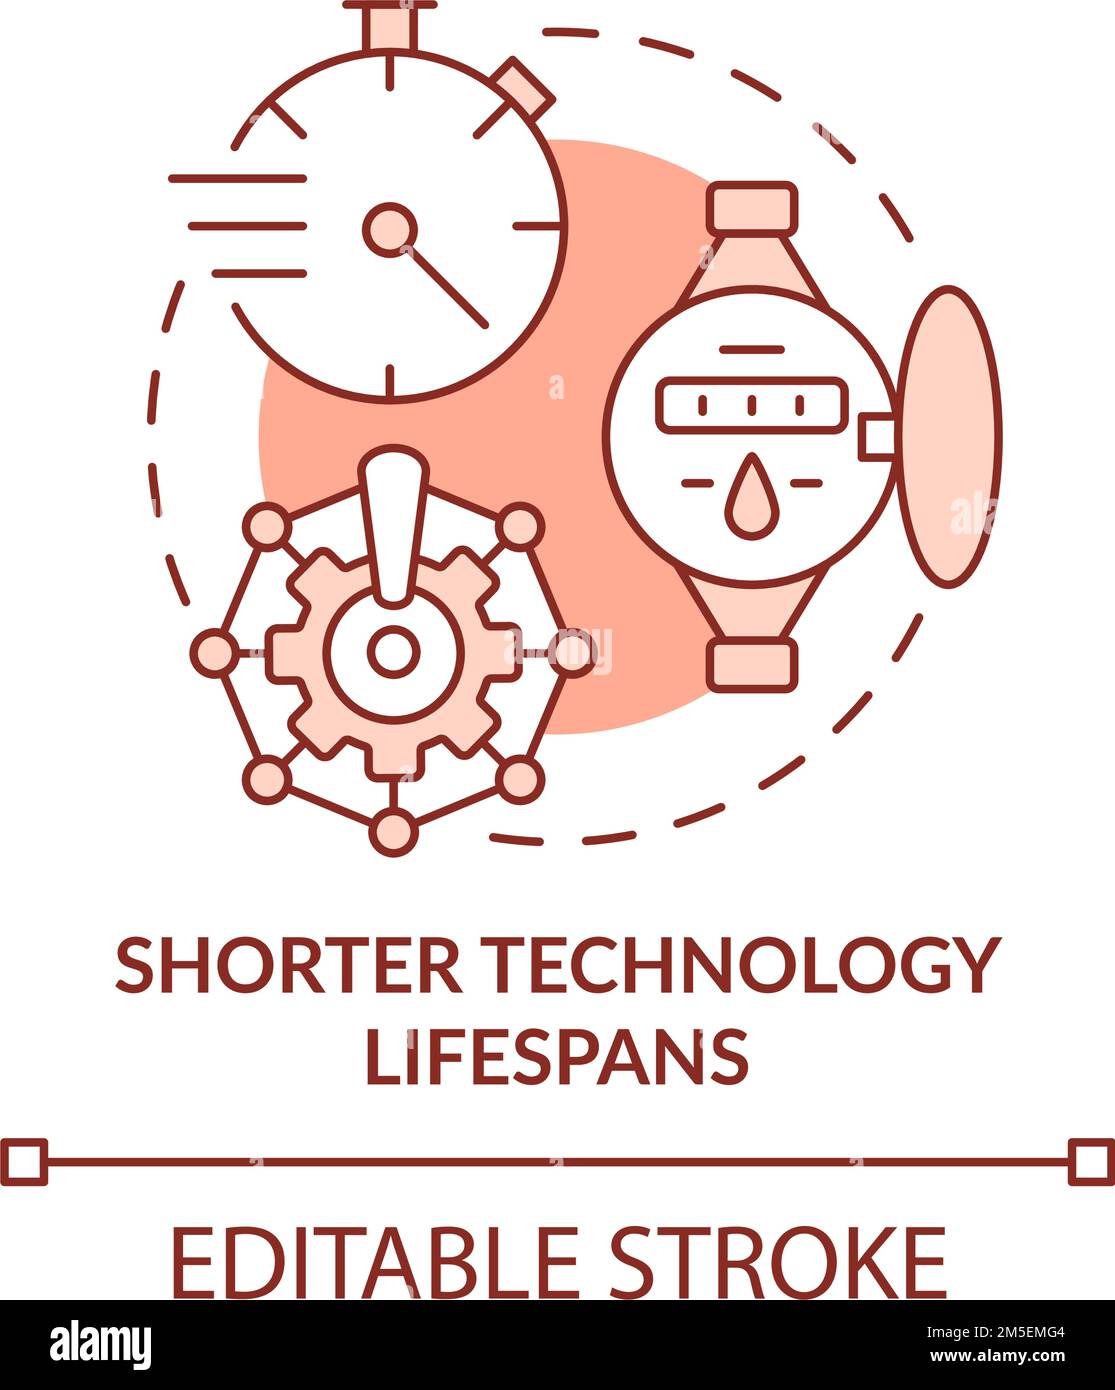 Shorter technology lifespans red concept icon Stock Vector